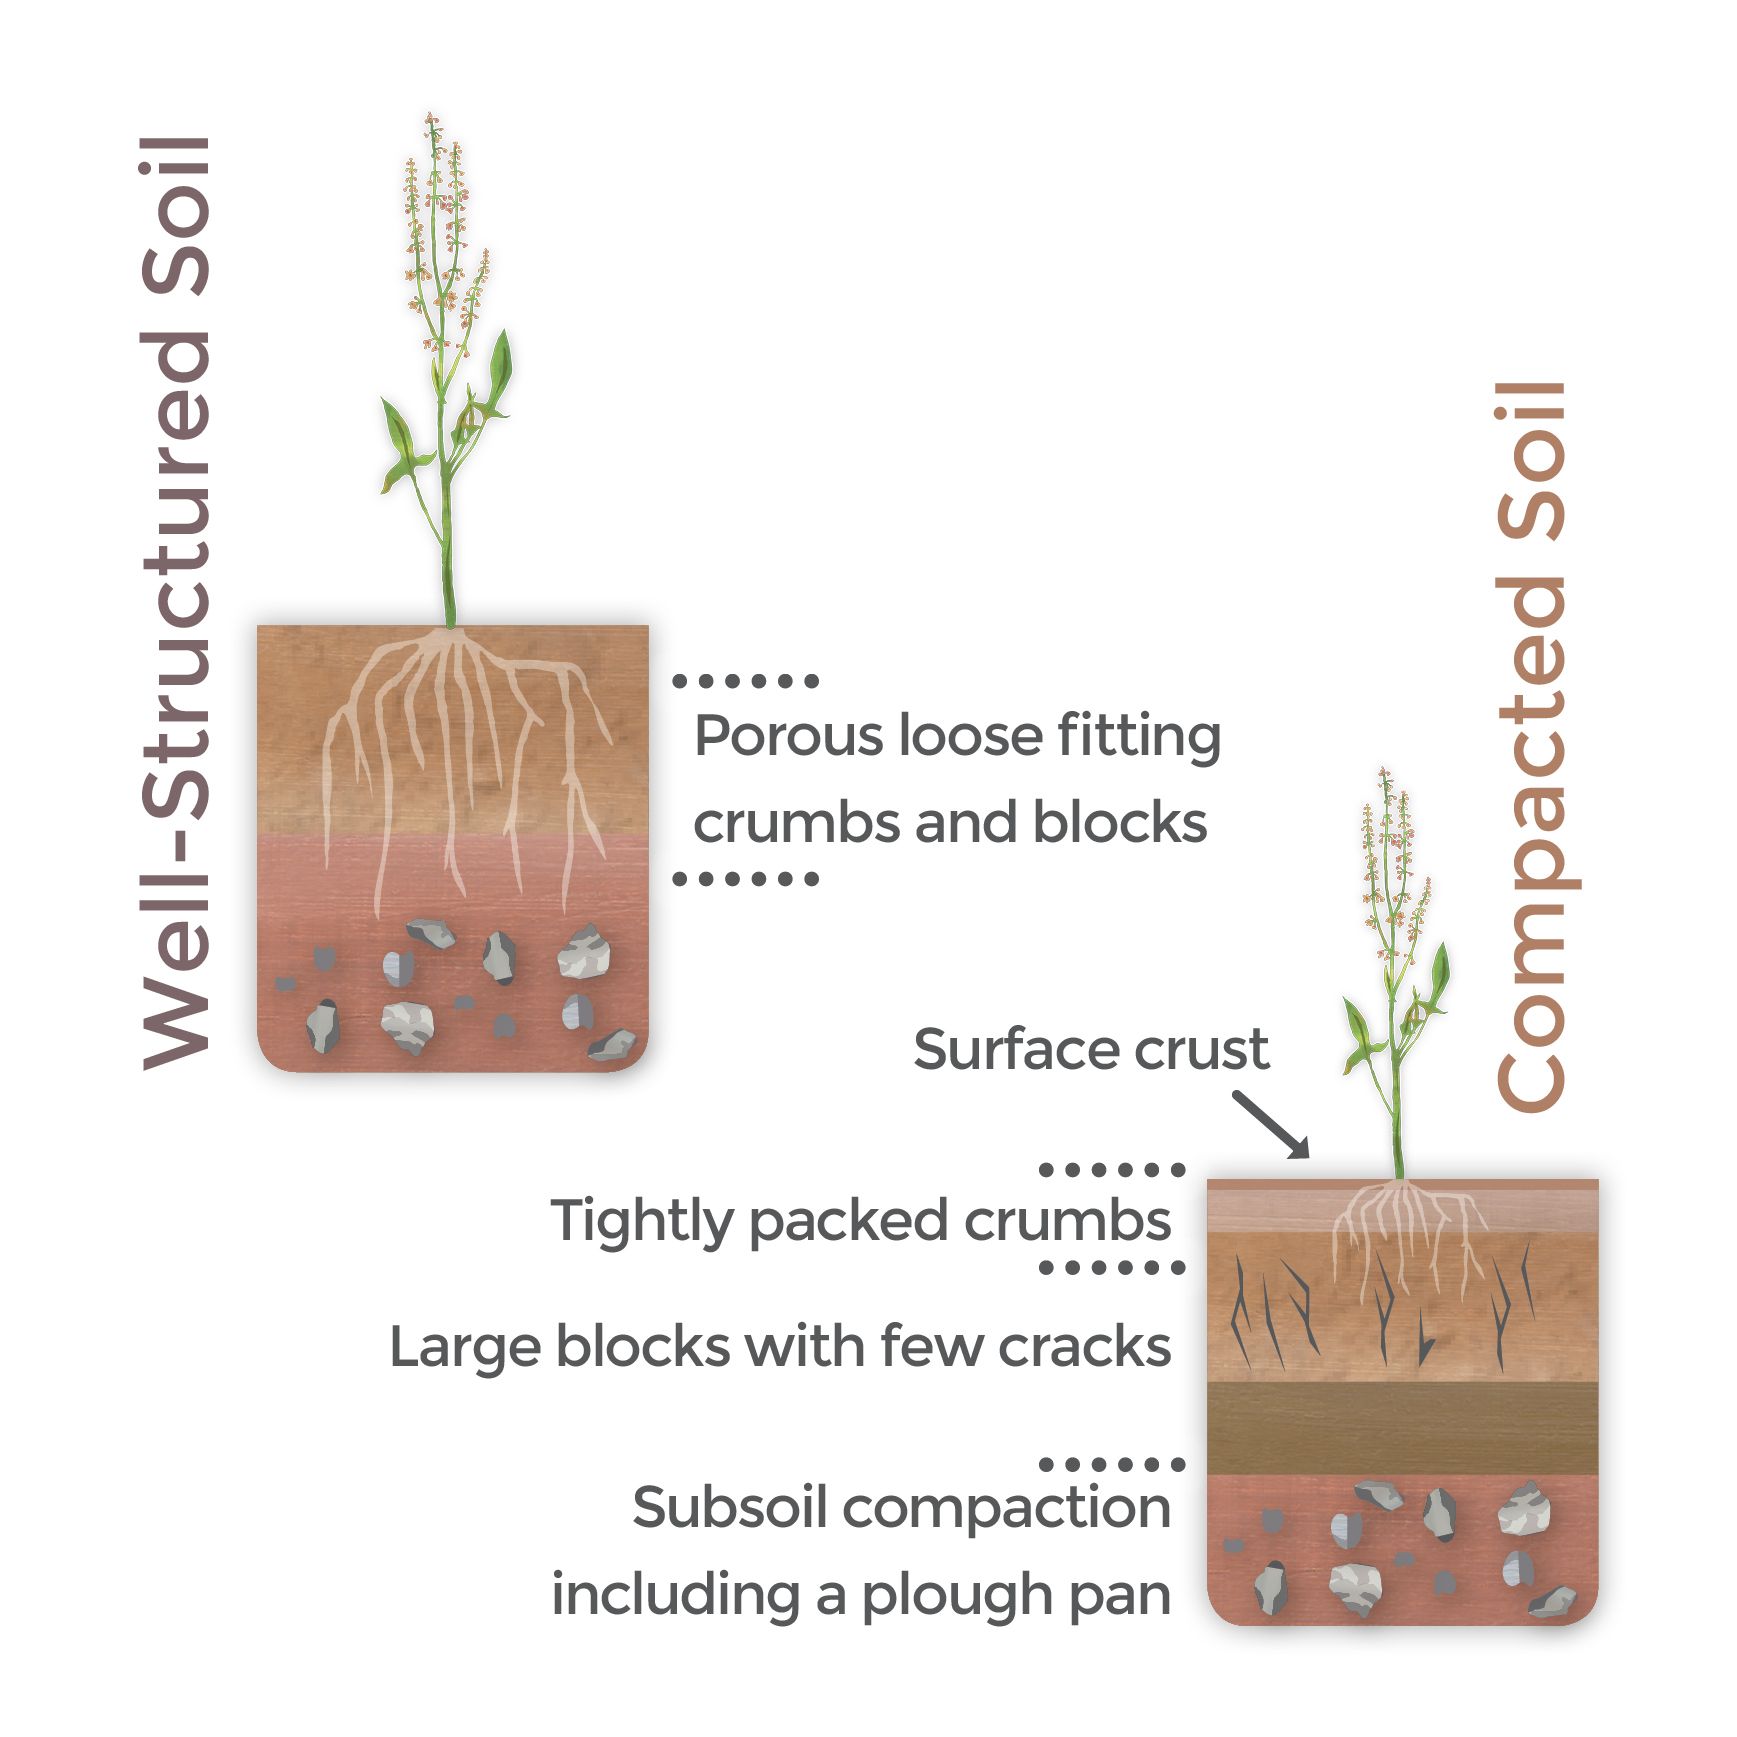 Soil compaction - Graphic